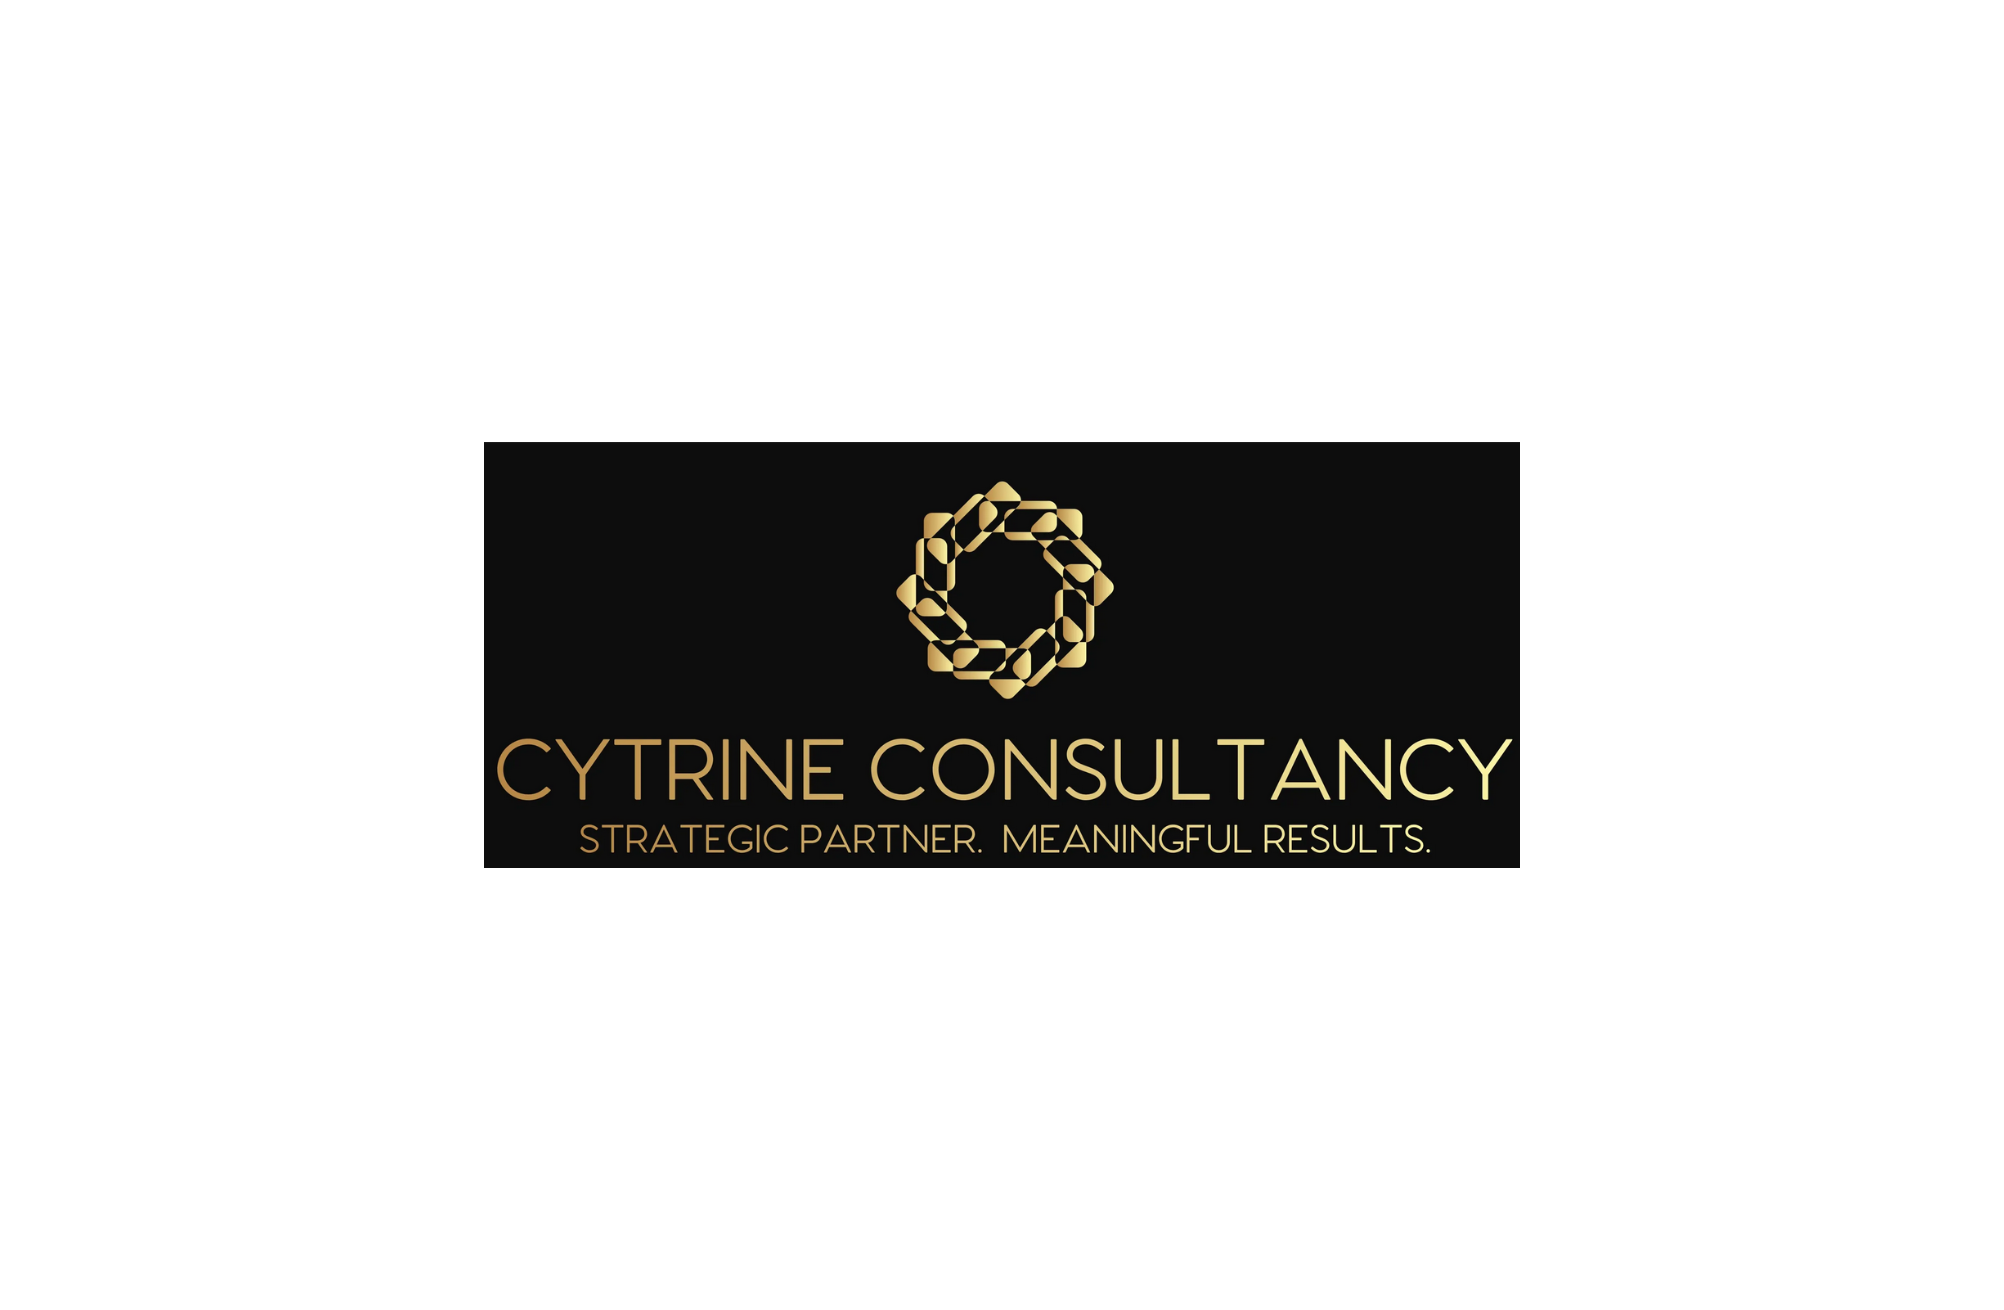 Cytrine Consultancy - Cynthia Rubino